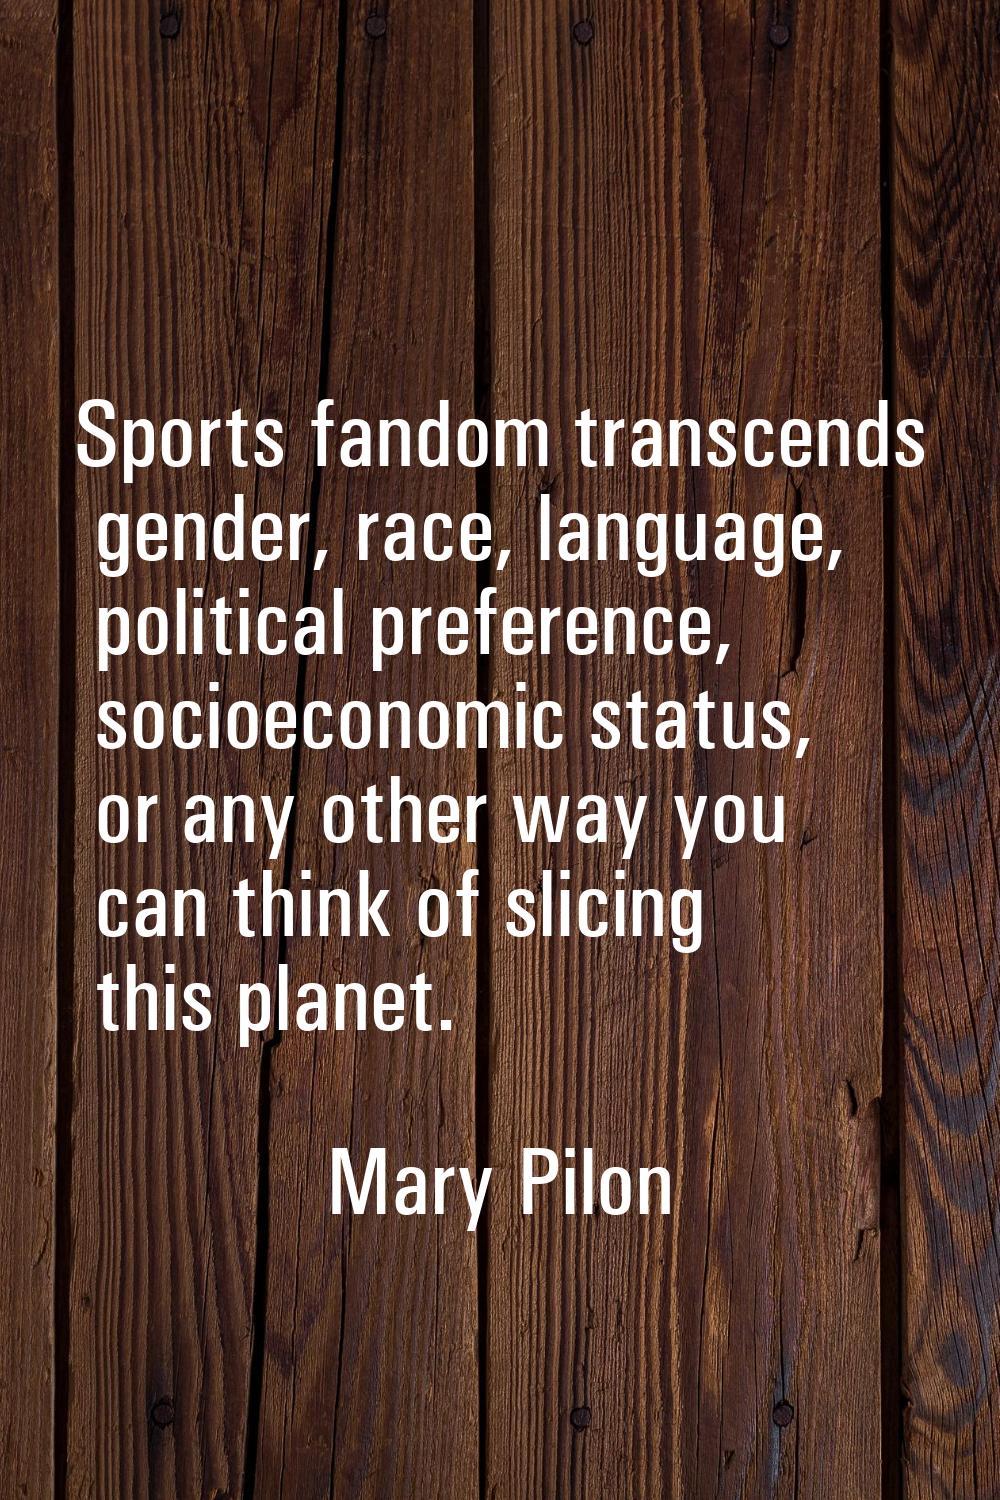 Sports fandom transcends gender, race, language, political preference, socioeconomic status, or any